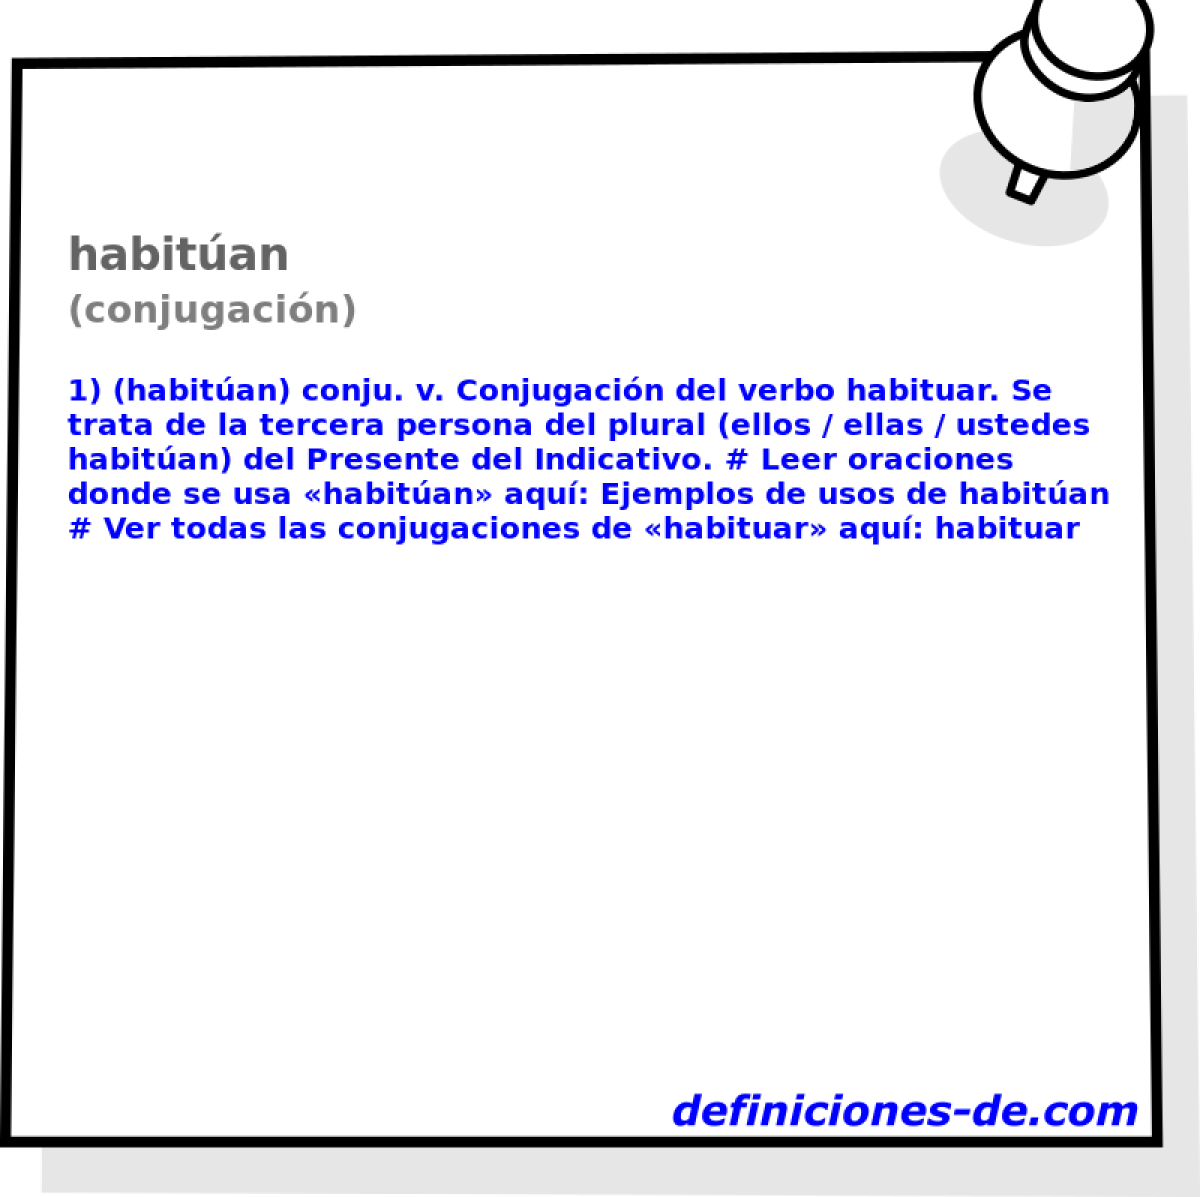 habitan (conjugacin)